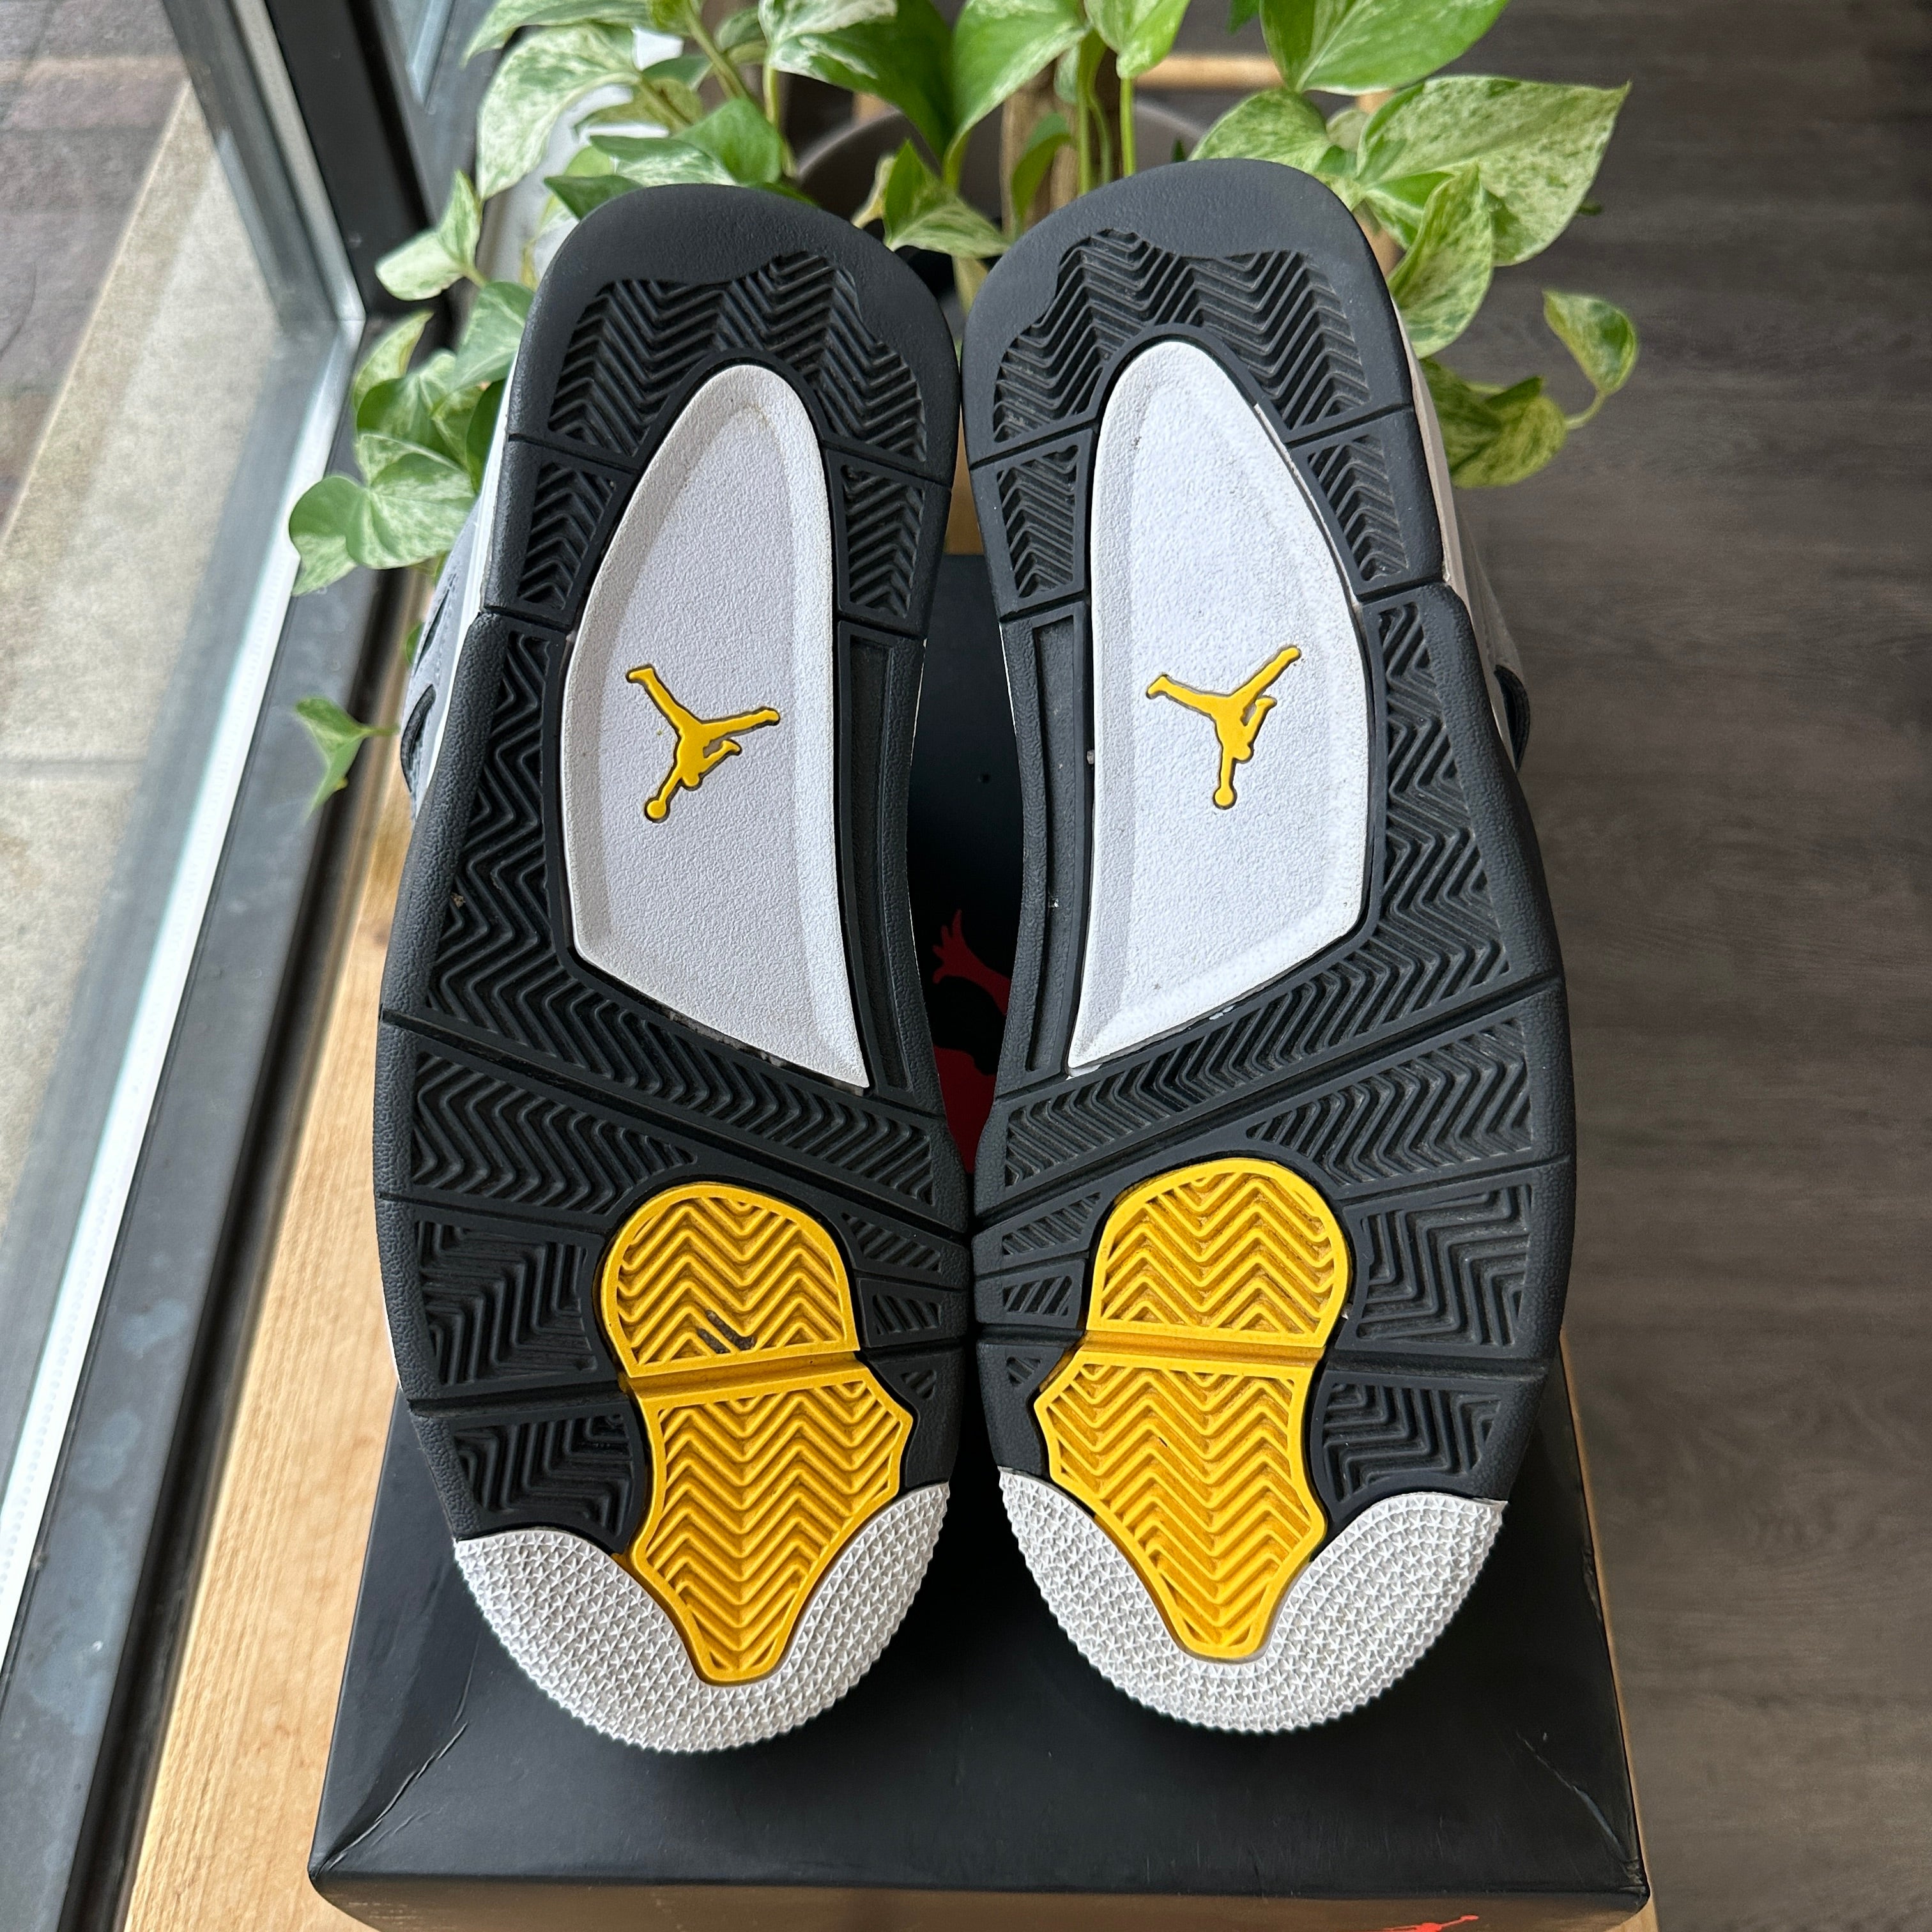 Air Jordan 4 "Cool Grey" Size 9